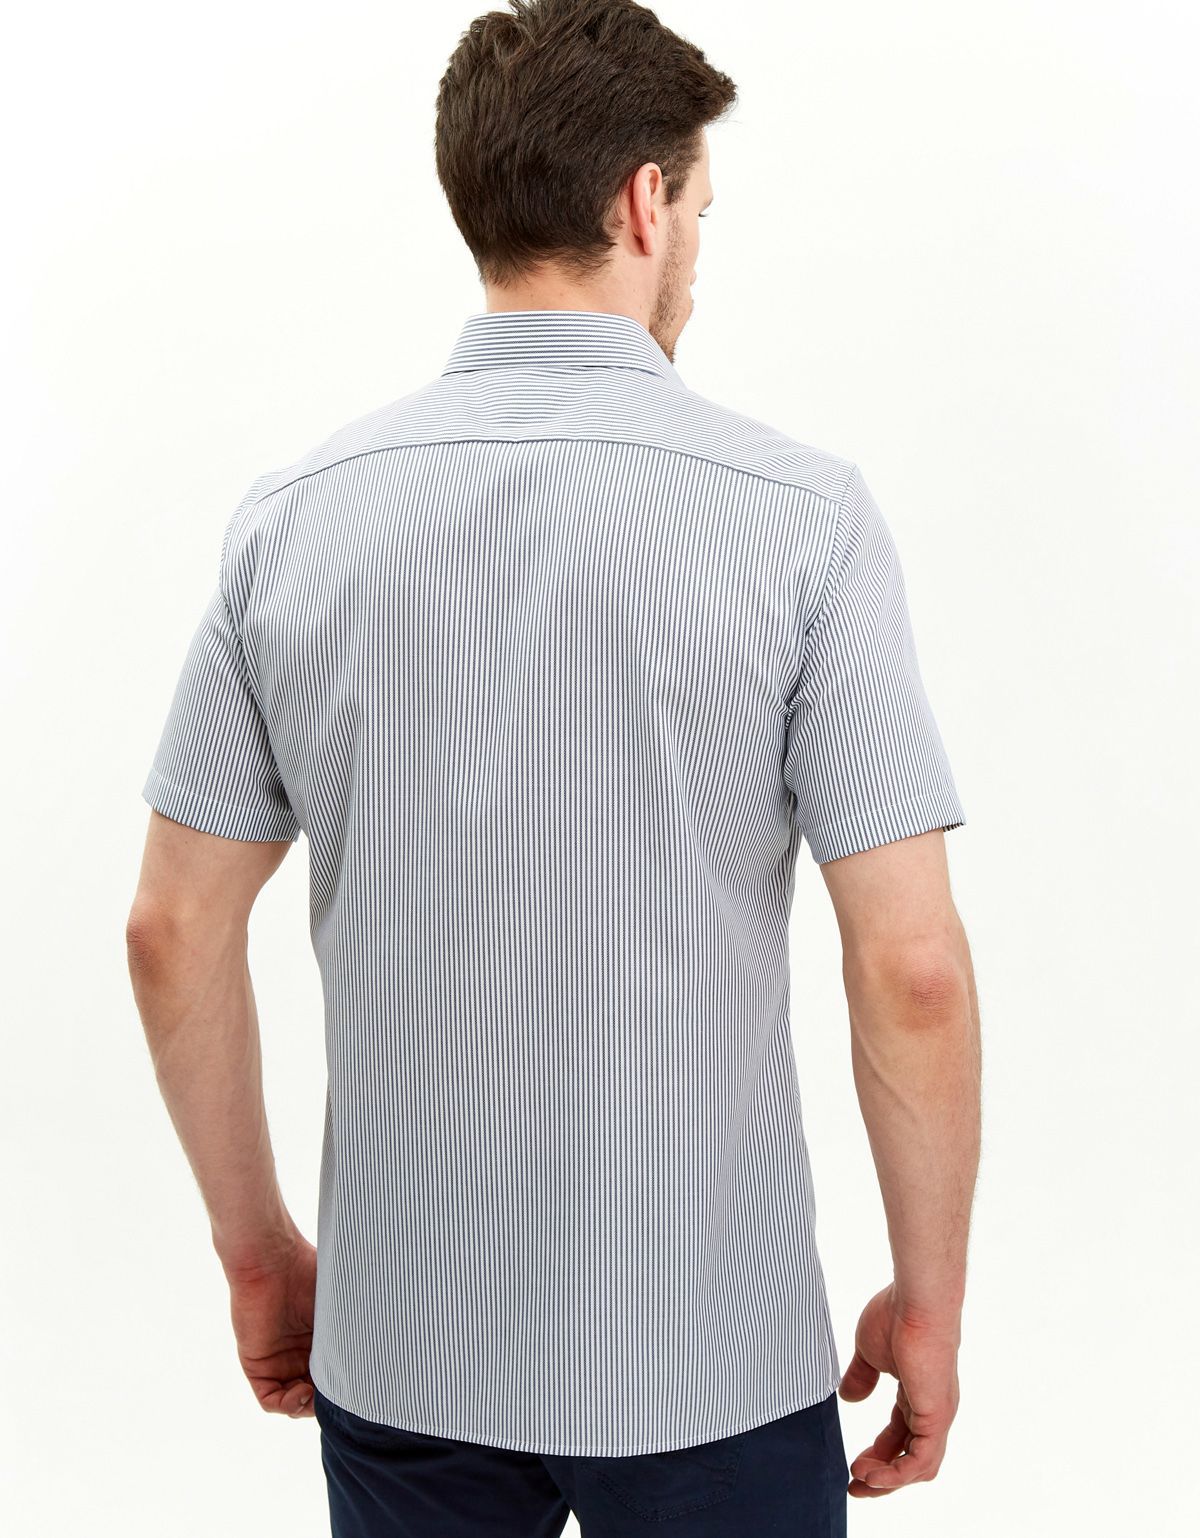 Рубашка мужская в полоску OLYMP Luxor, modern fit